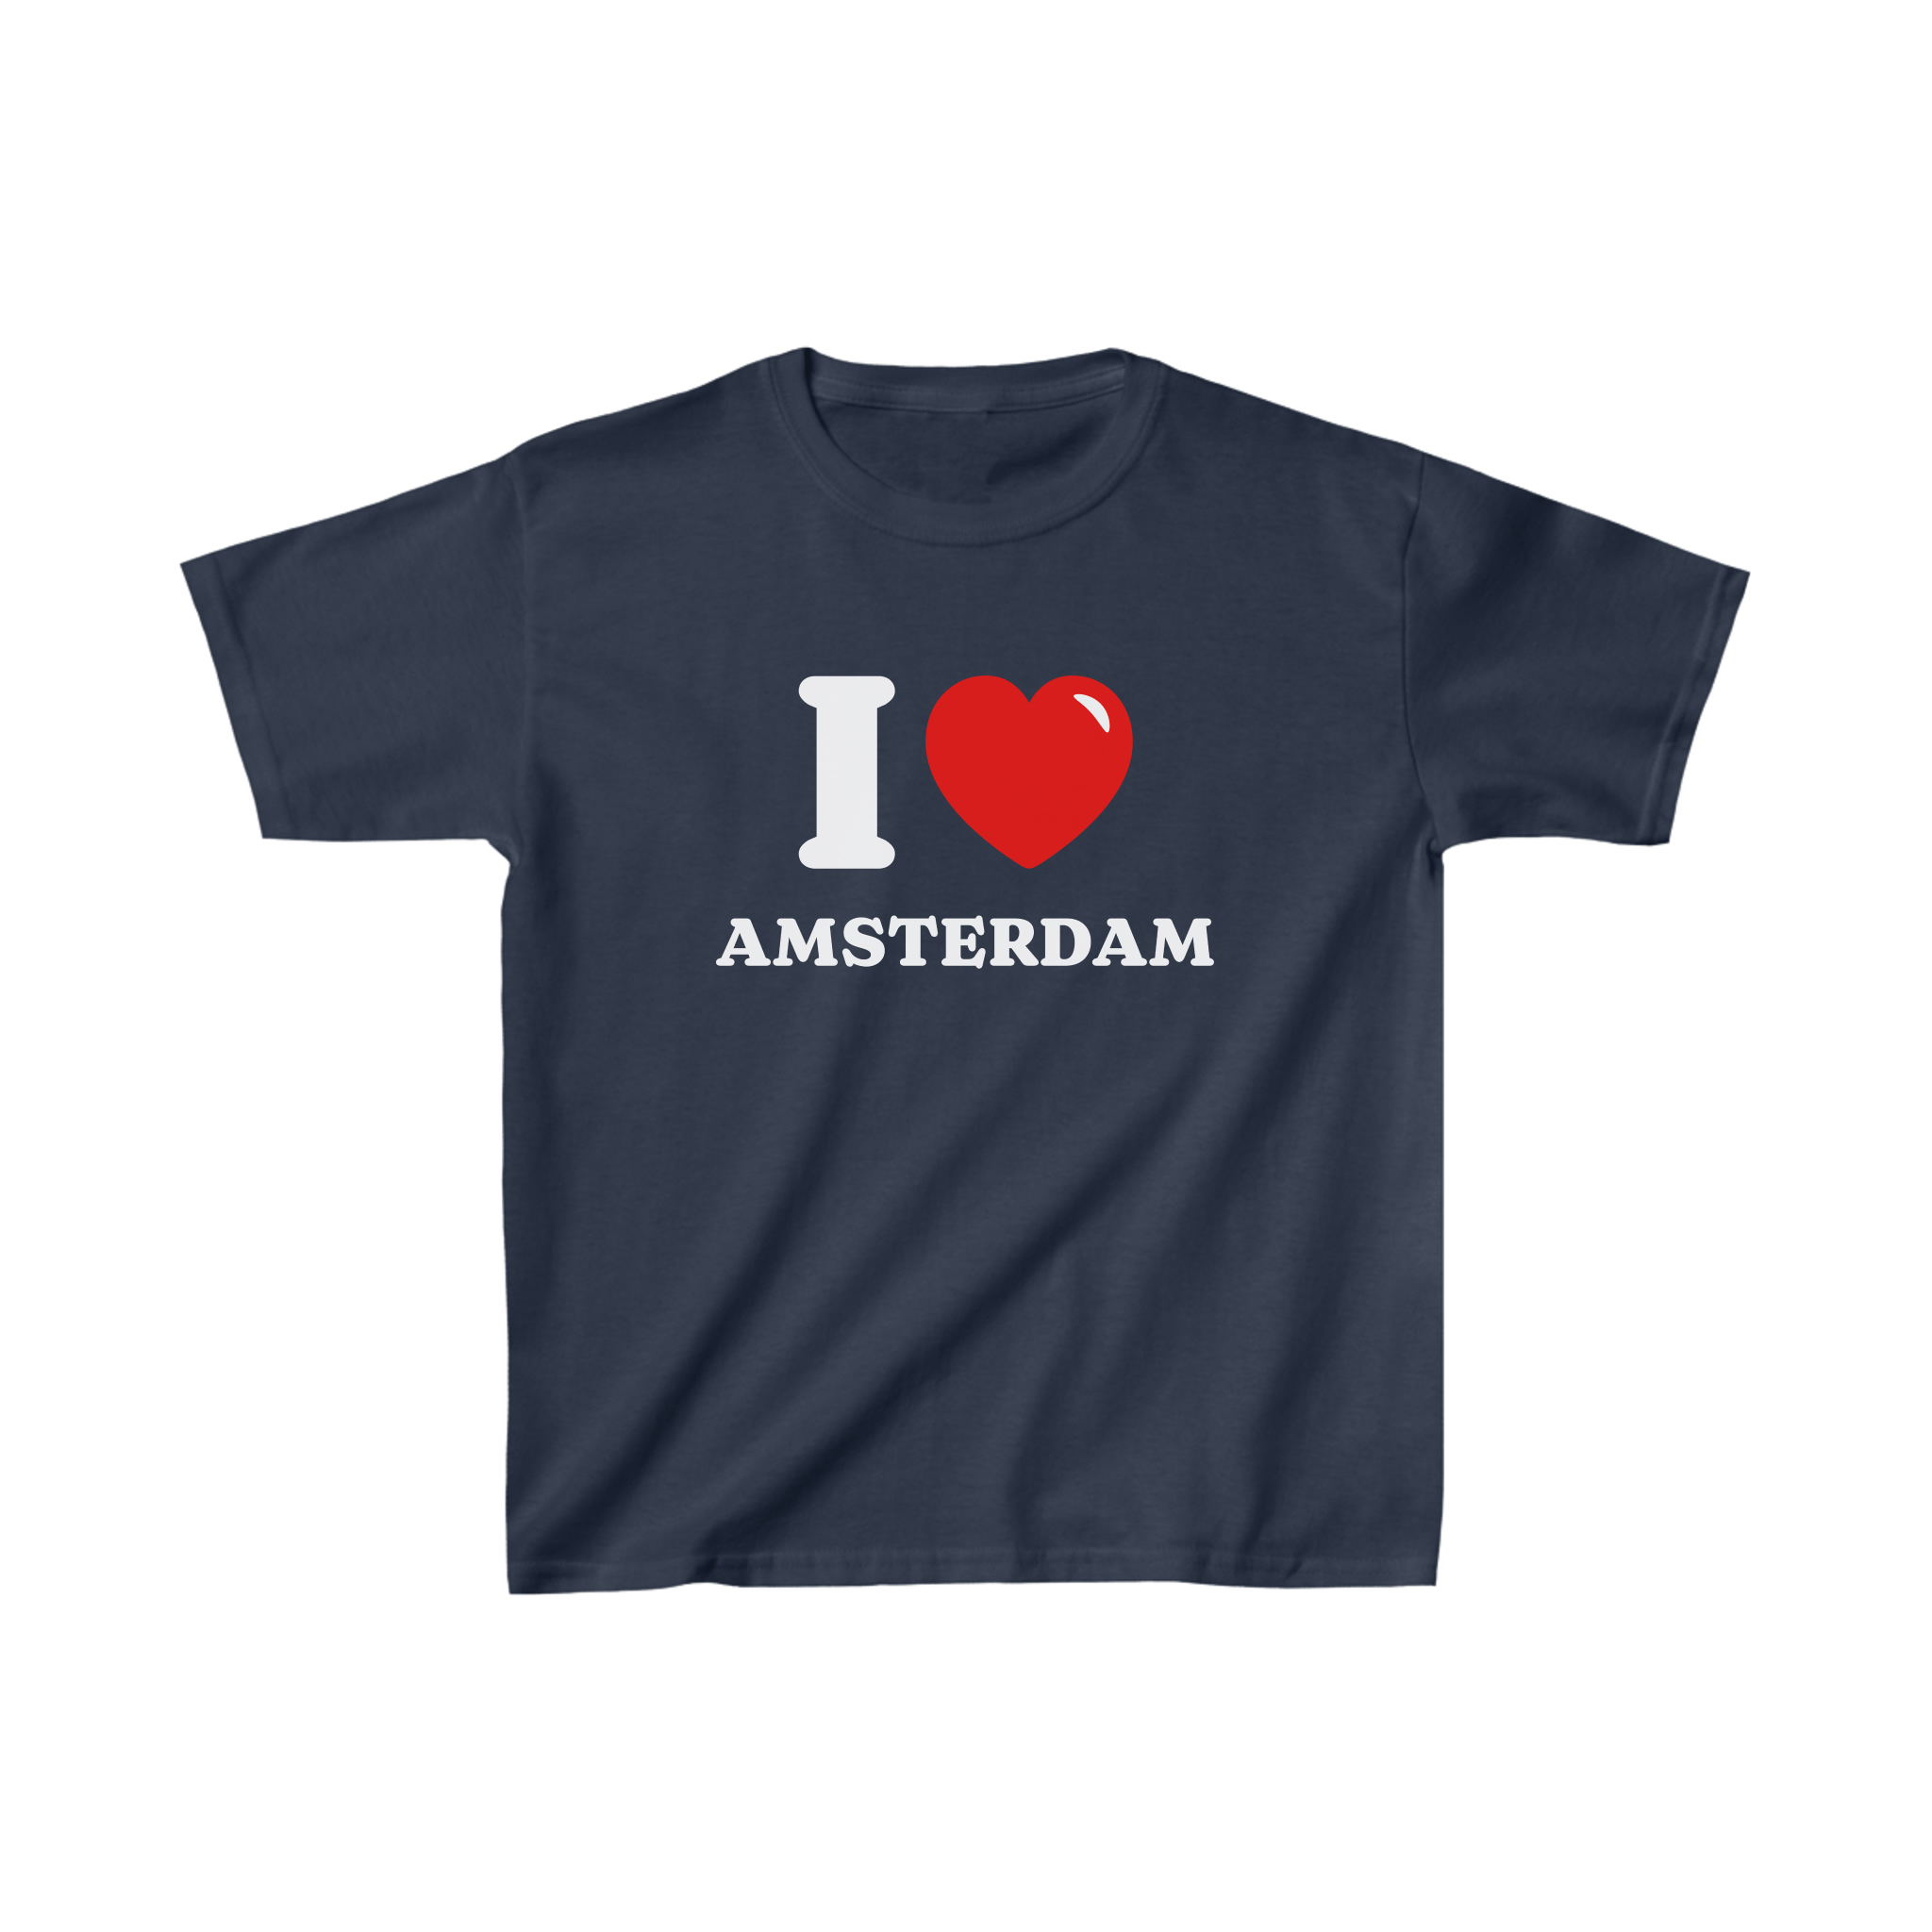 'I love Amsterdam' baby tee - In Print We Trust